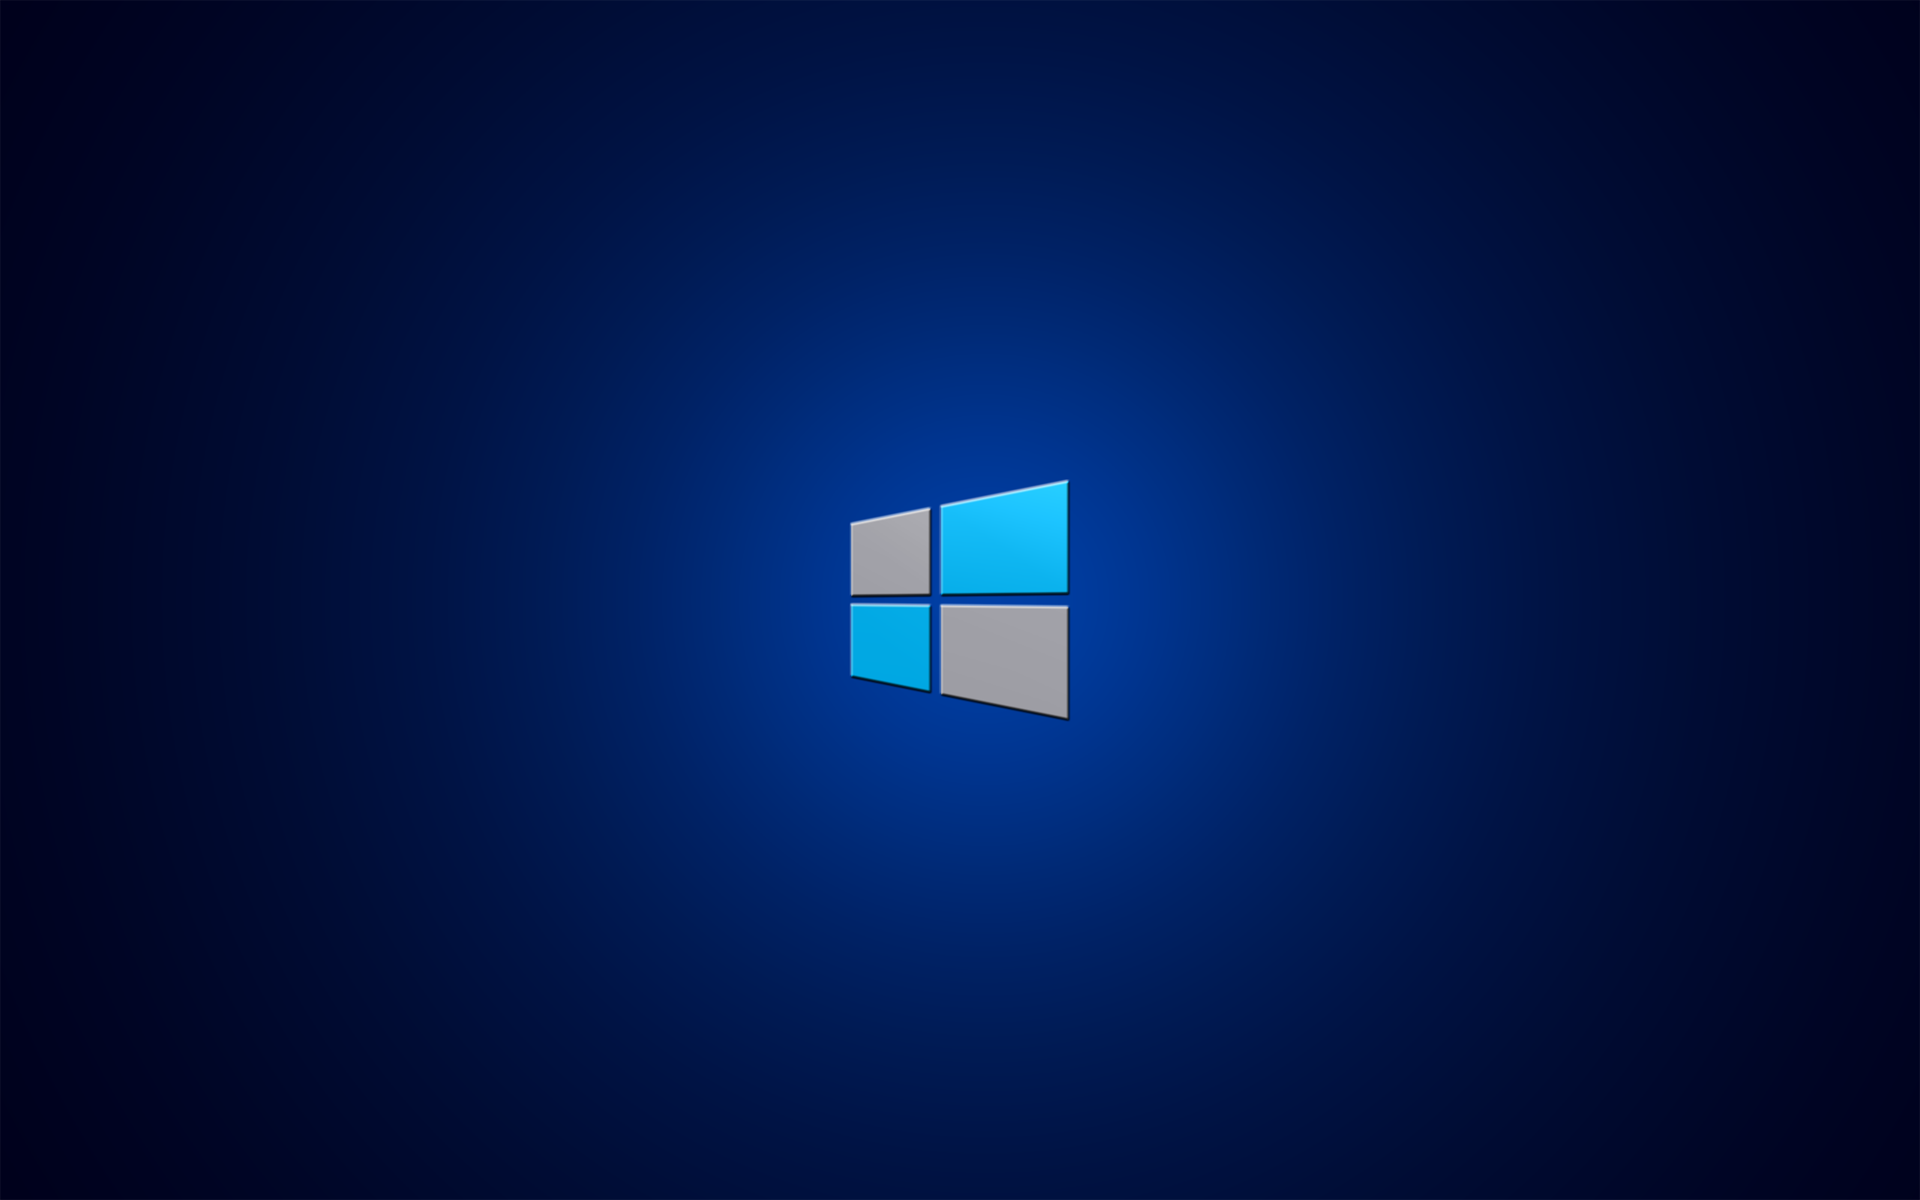 Best Windows 8 Wallpapers - Wallpaper Cave